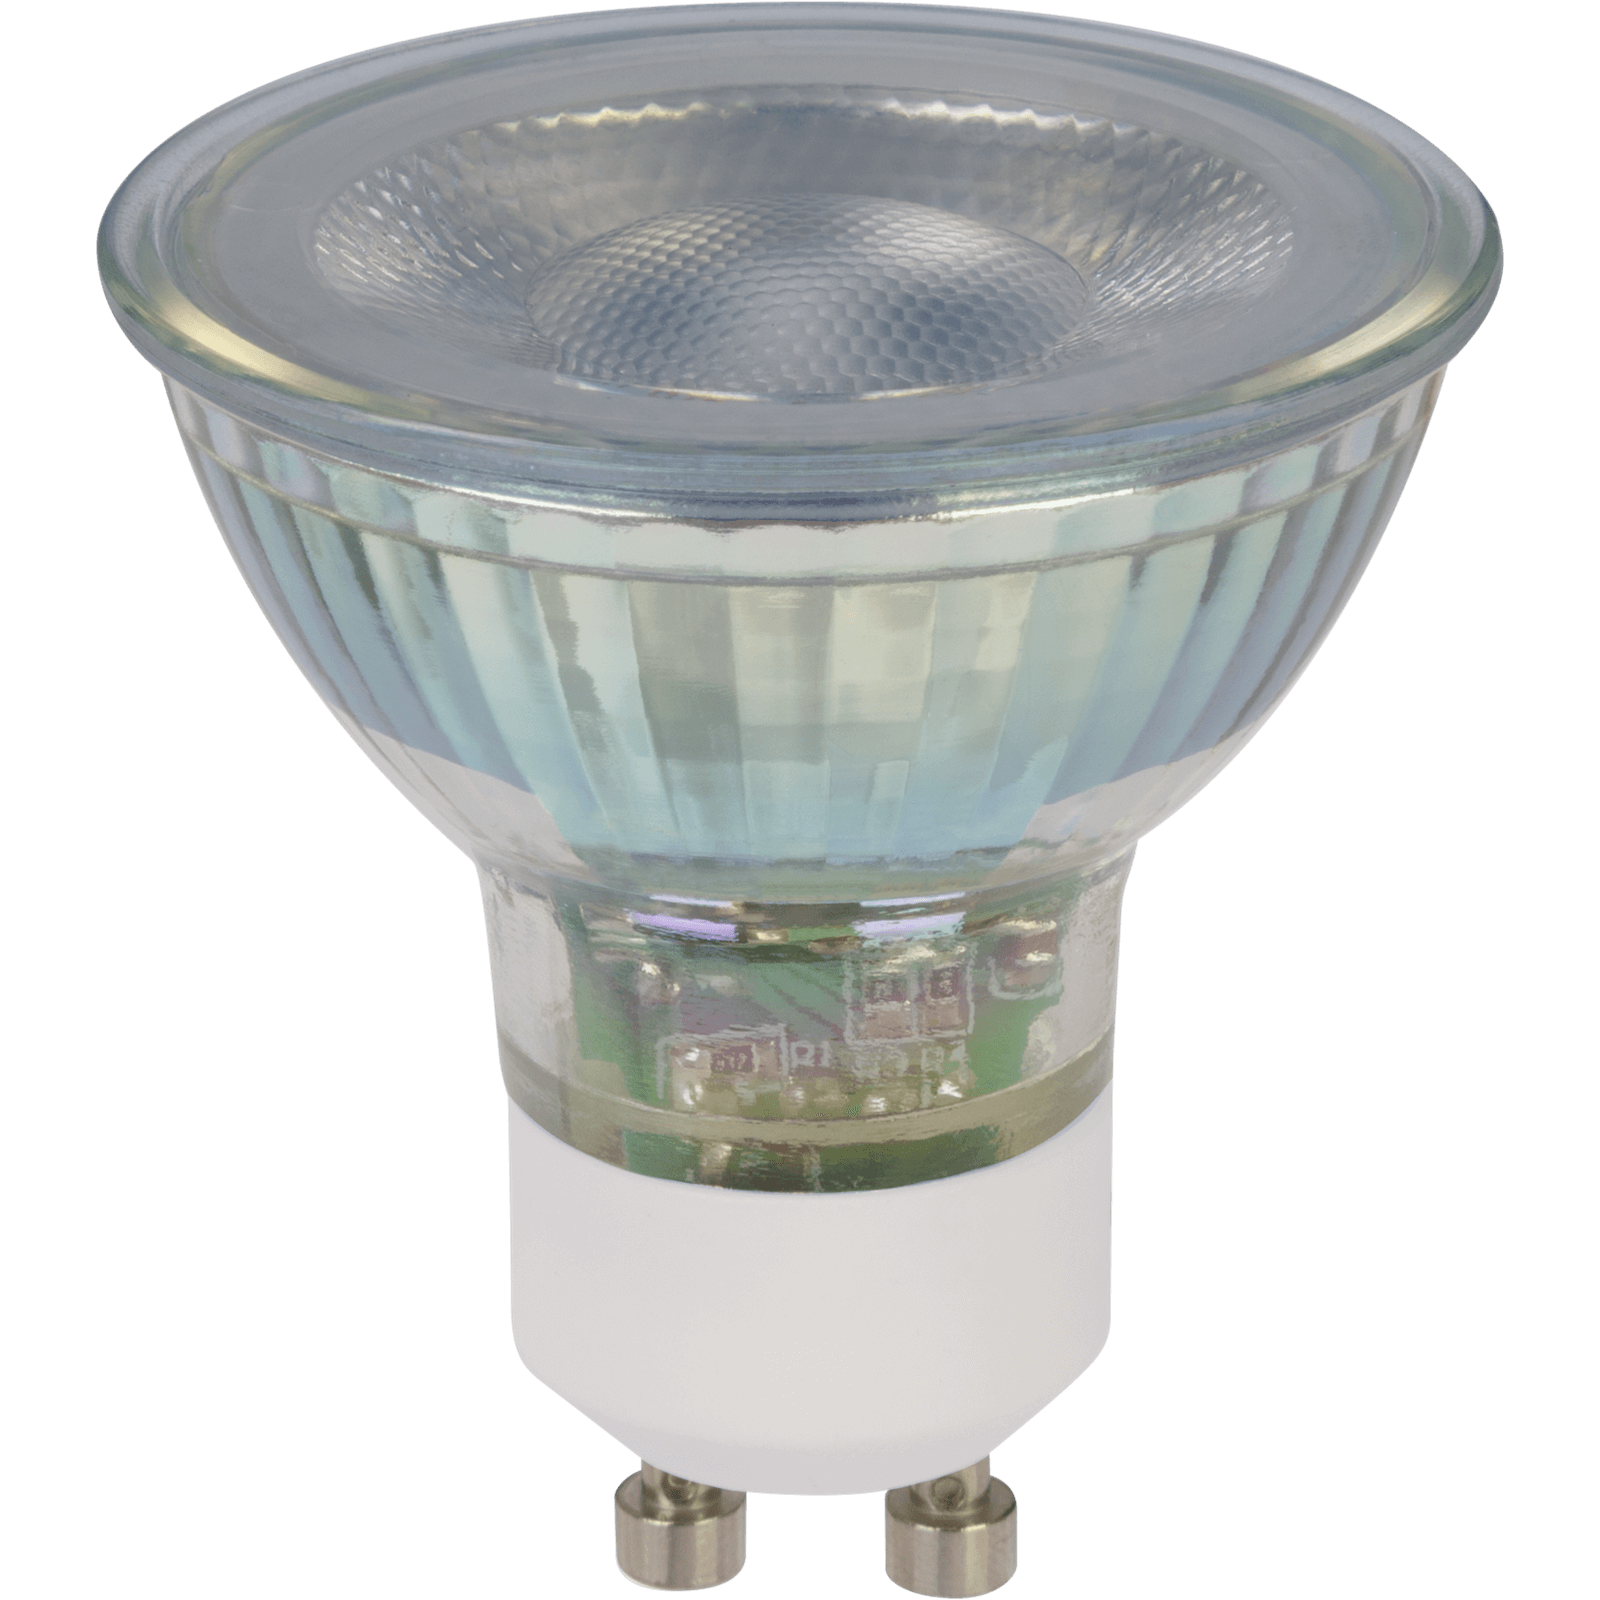 TCP LED Glass GU10 50W Warm Dimmable Light Bulb - 4 pack